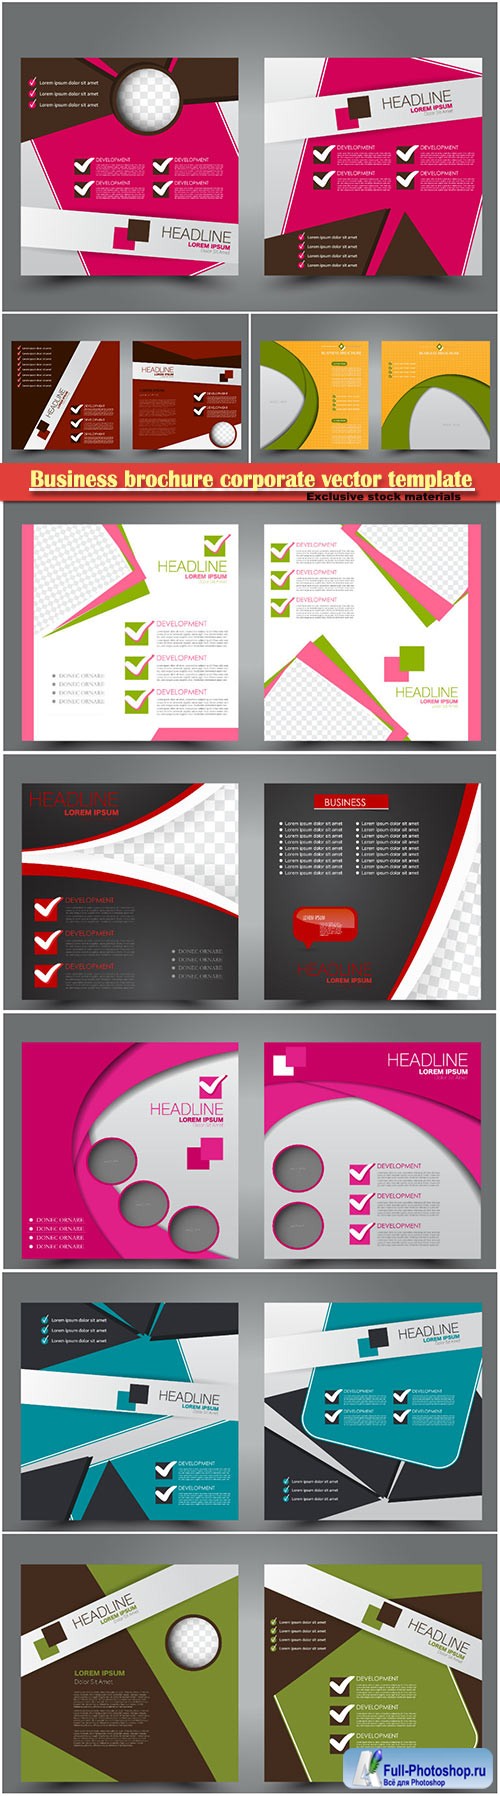 Business brochure corporate vector template, magazine flyer mockup # 14